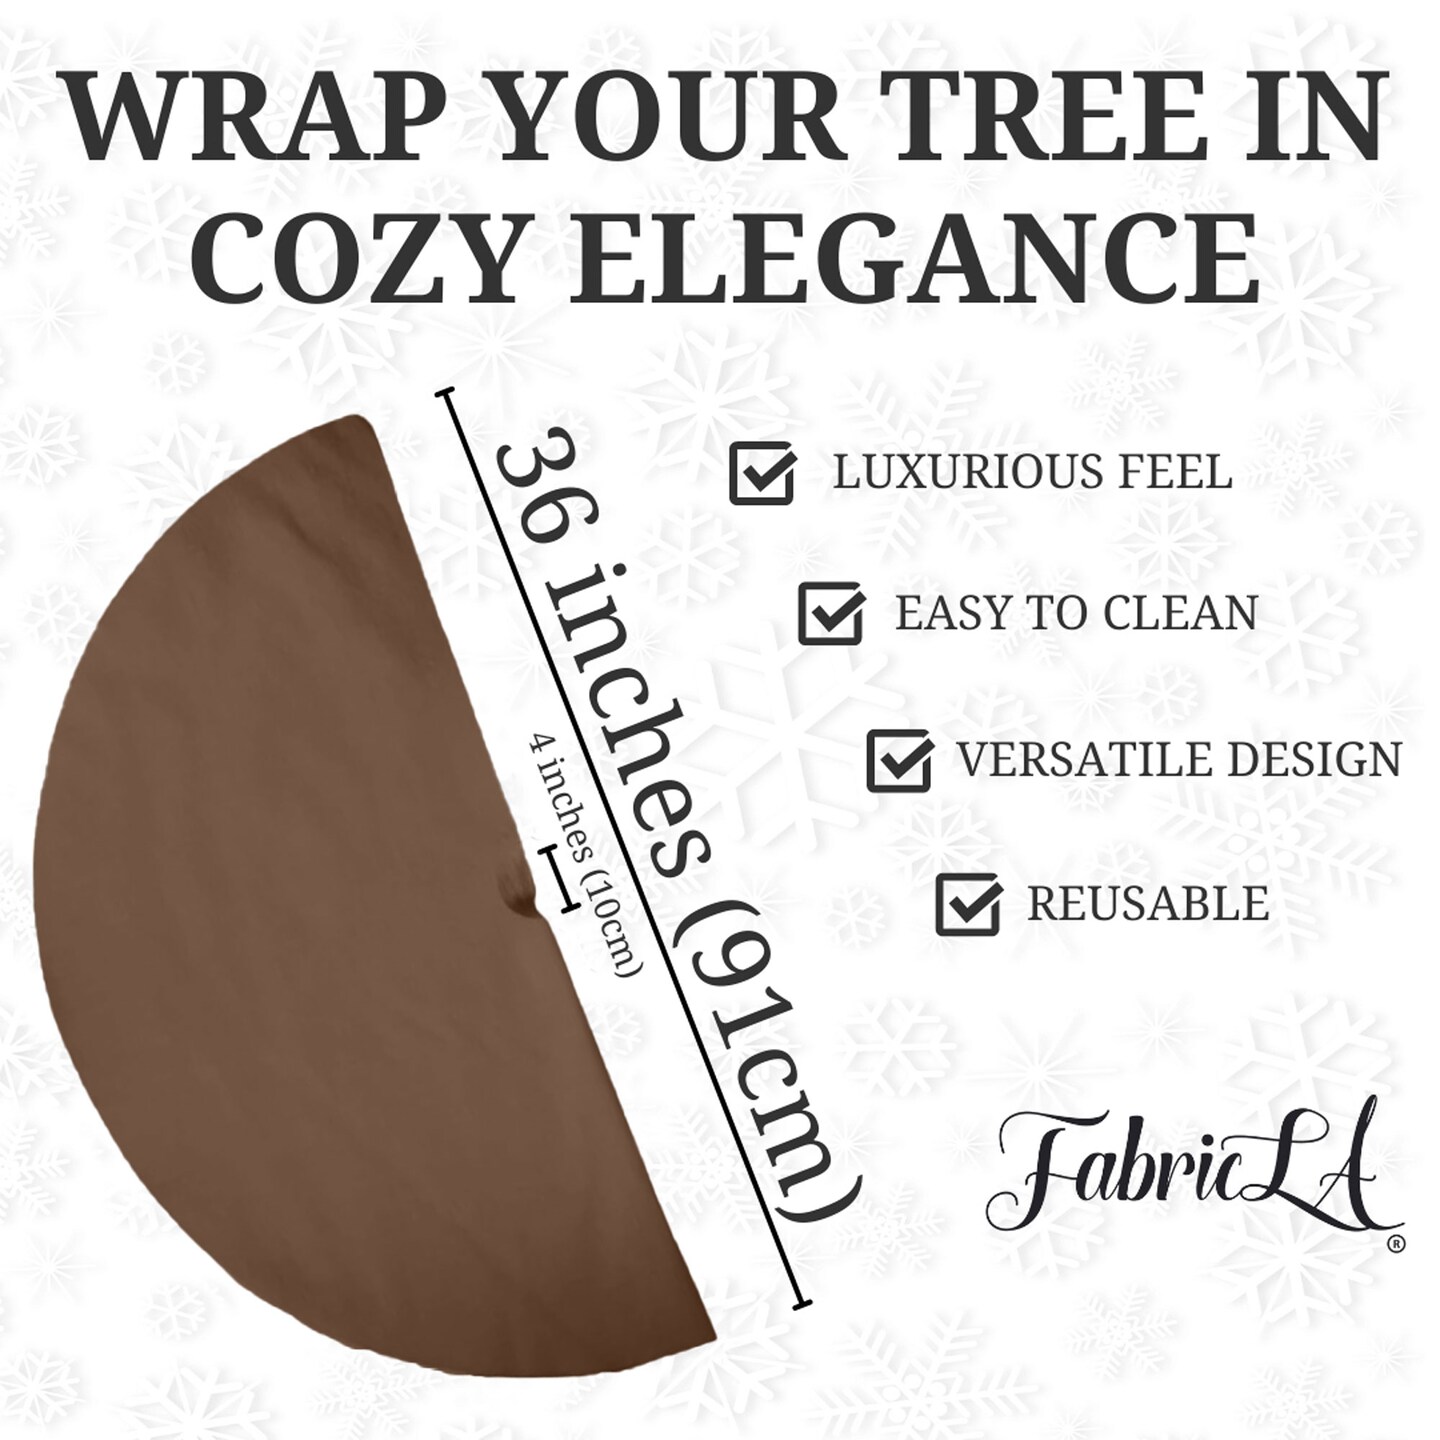 36&#x22; Light Brown Faux Fur Christmas Tree Skirt - Fluffy Plush Tree Skirt (91cm) for Holiday Decorations (FabricLA)